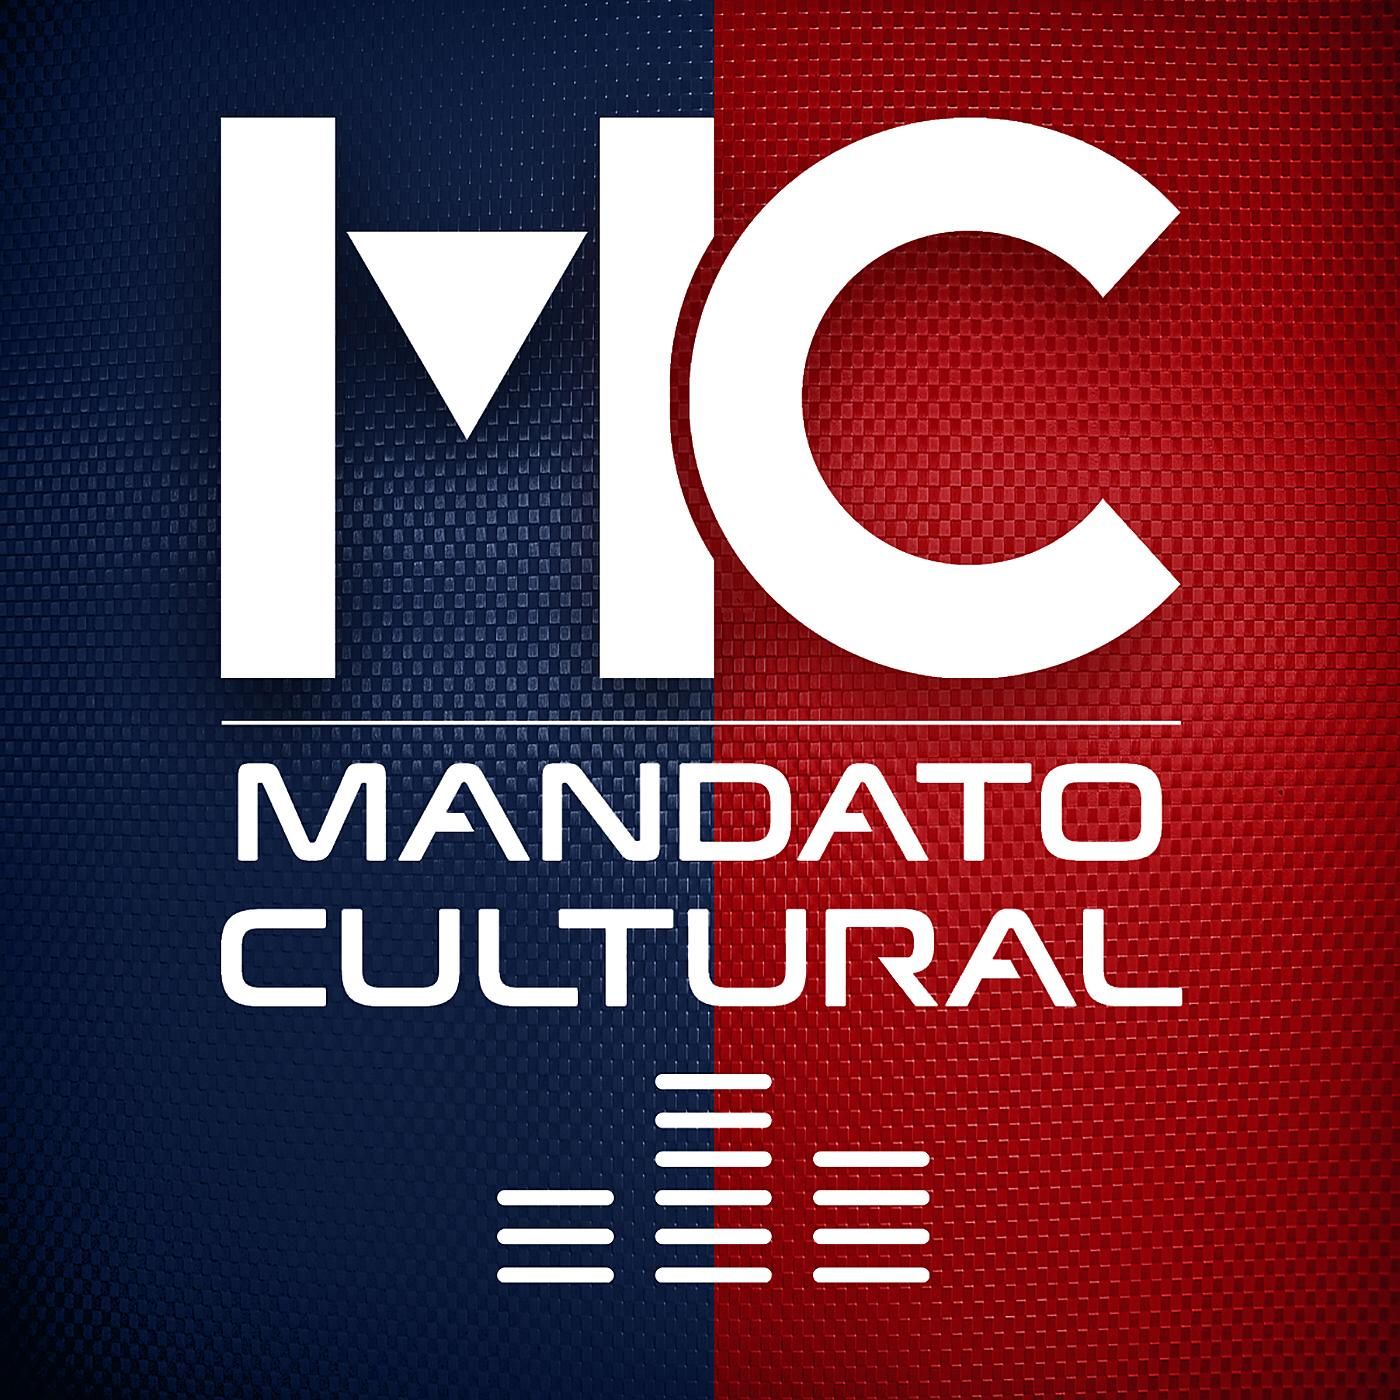 Mandato Cultural - Reflexiones